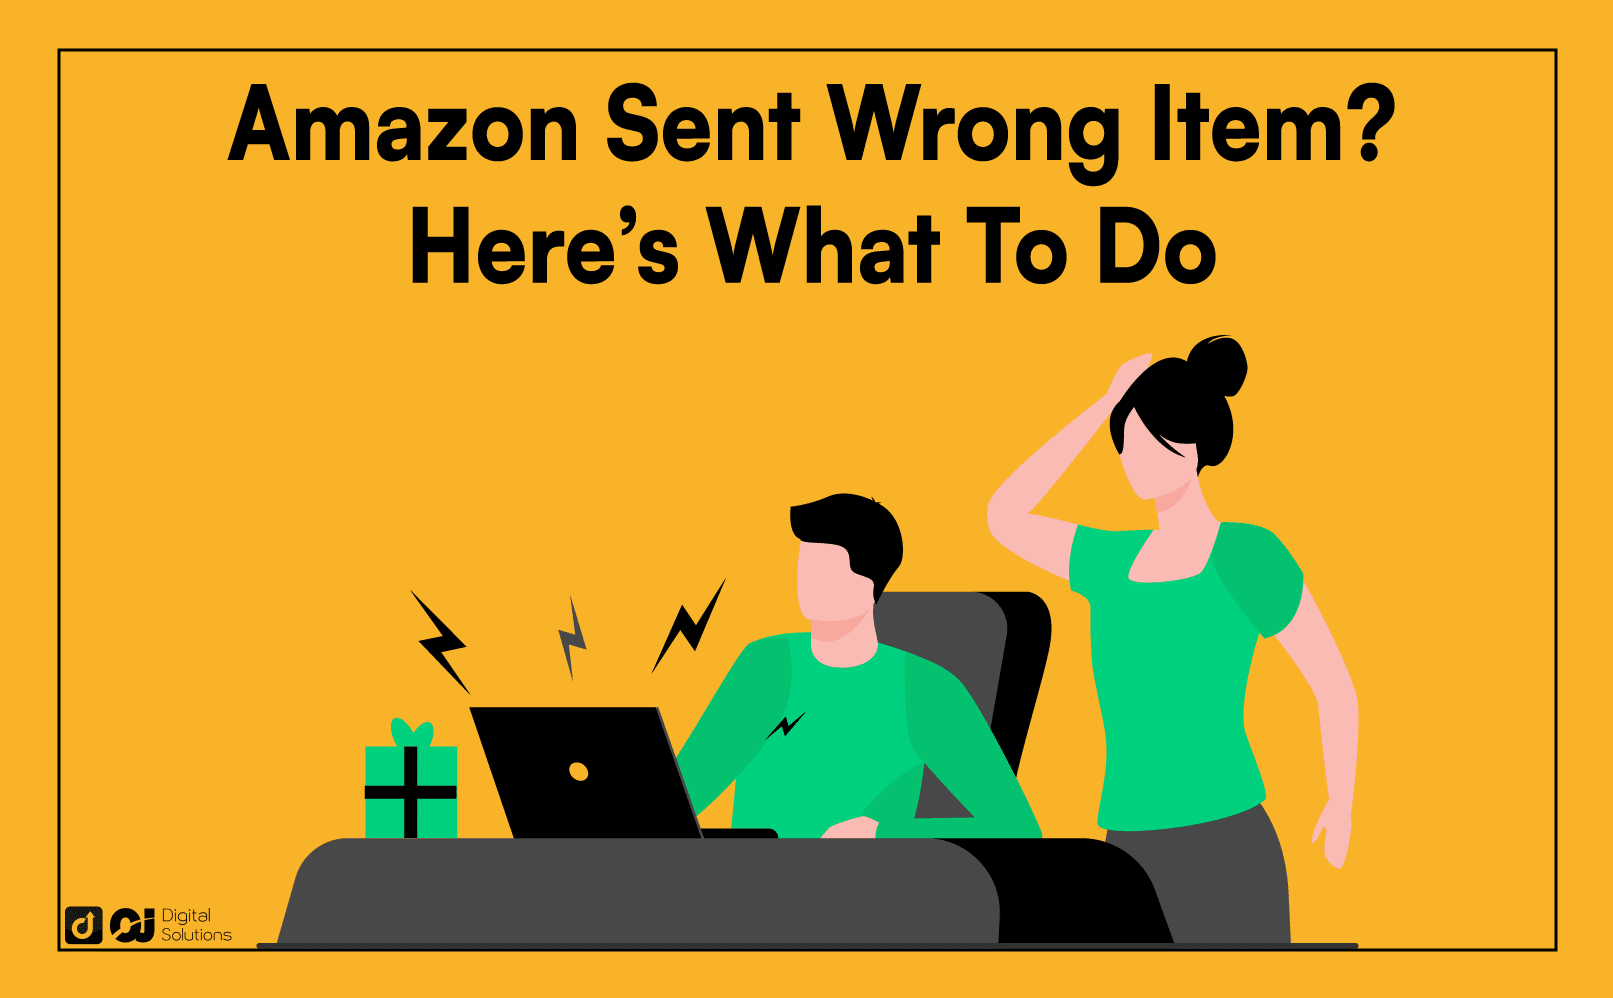 Amazon sent wrong item